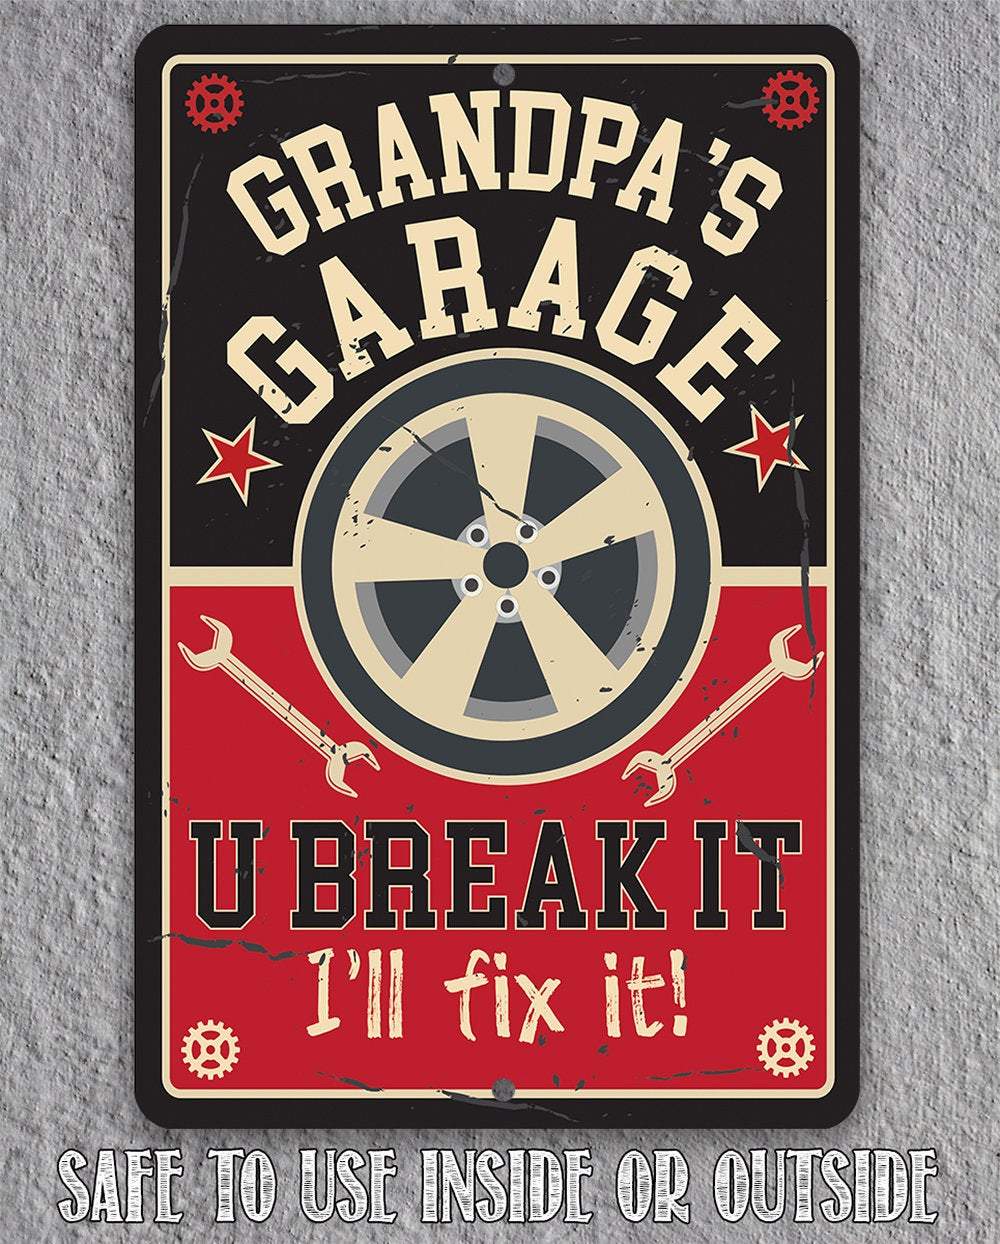 Grandpa's Garage - Metal Sign | Lone Star Art.